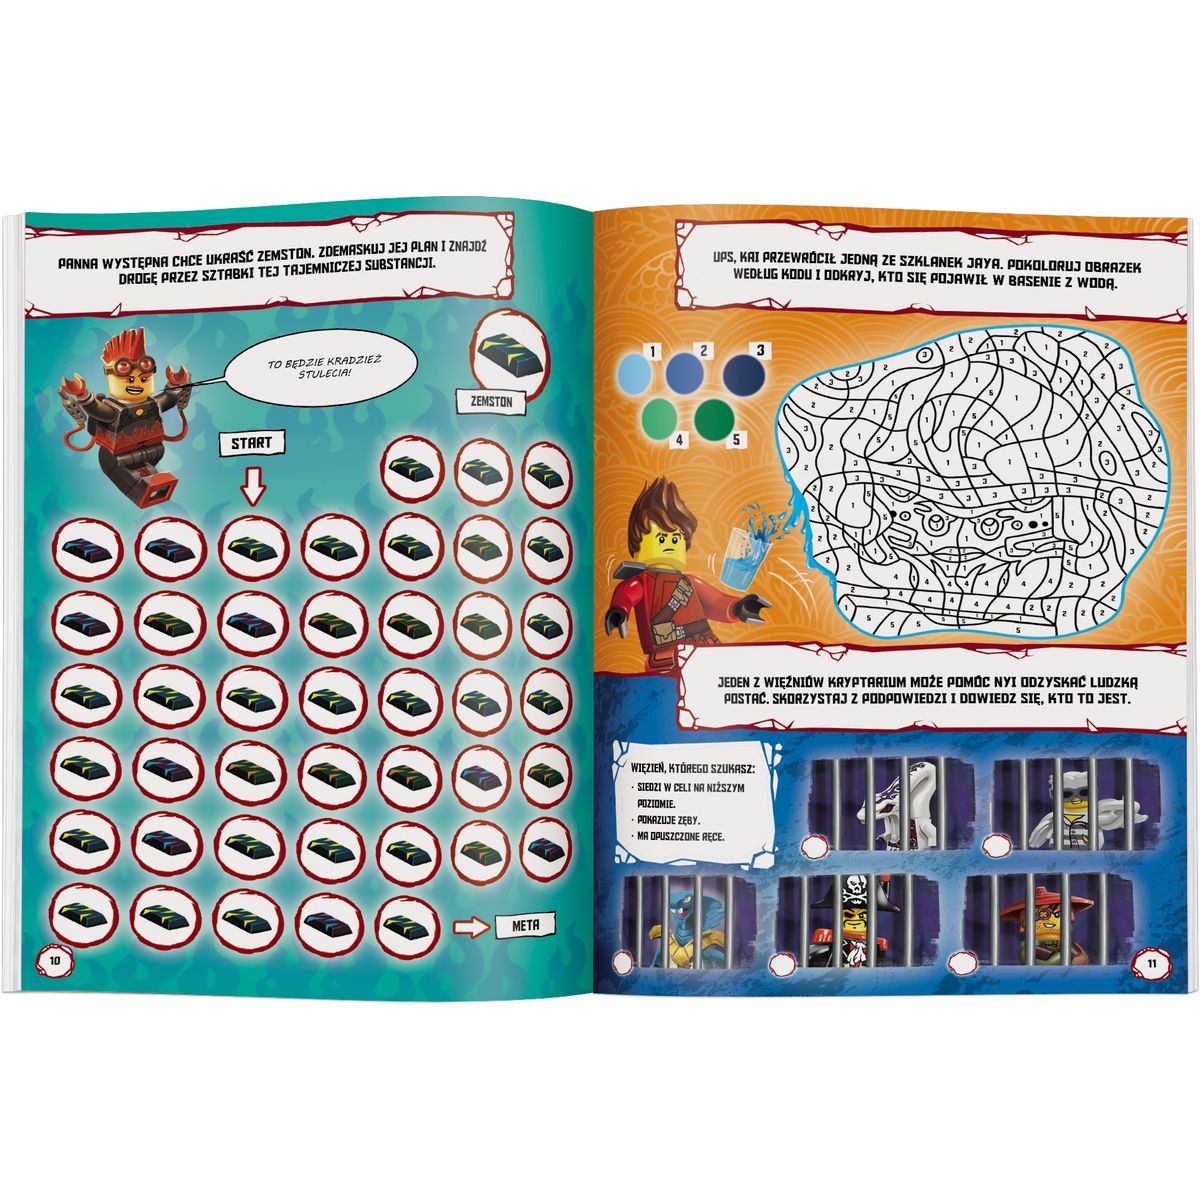 Książka dla dzieci LEGO® NINJAGO®. Styl dla Ninja Ameet (LNC6724)